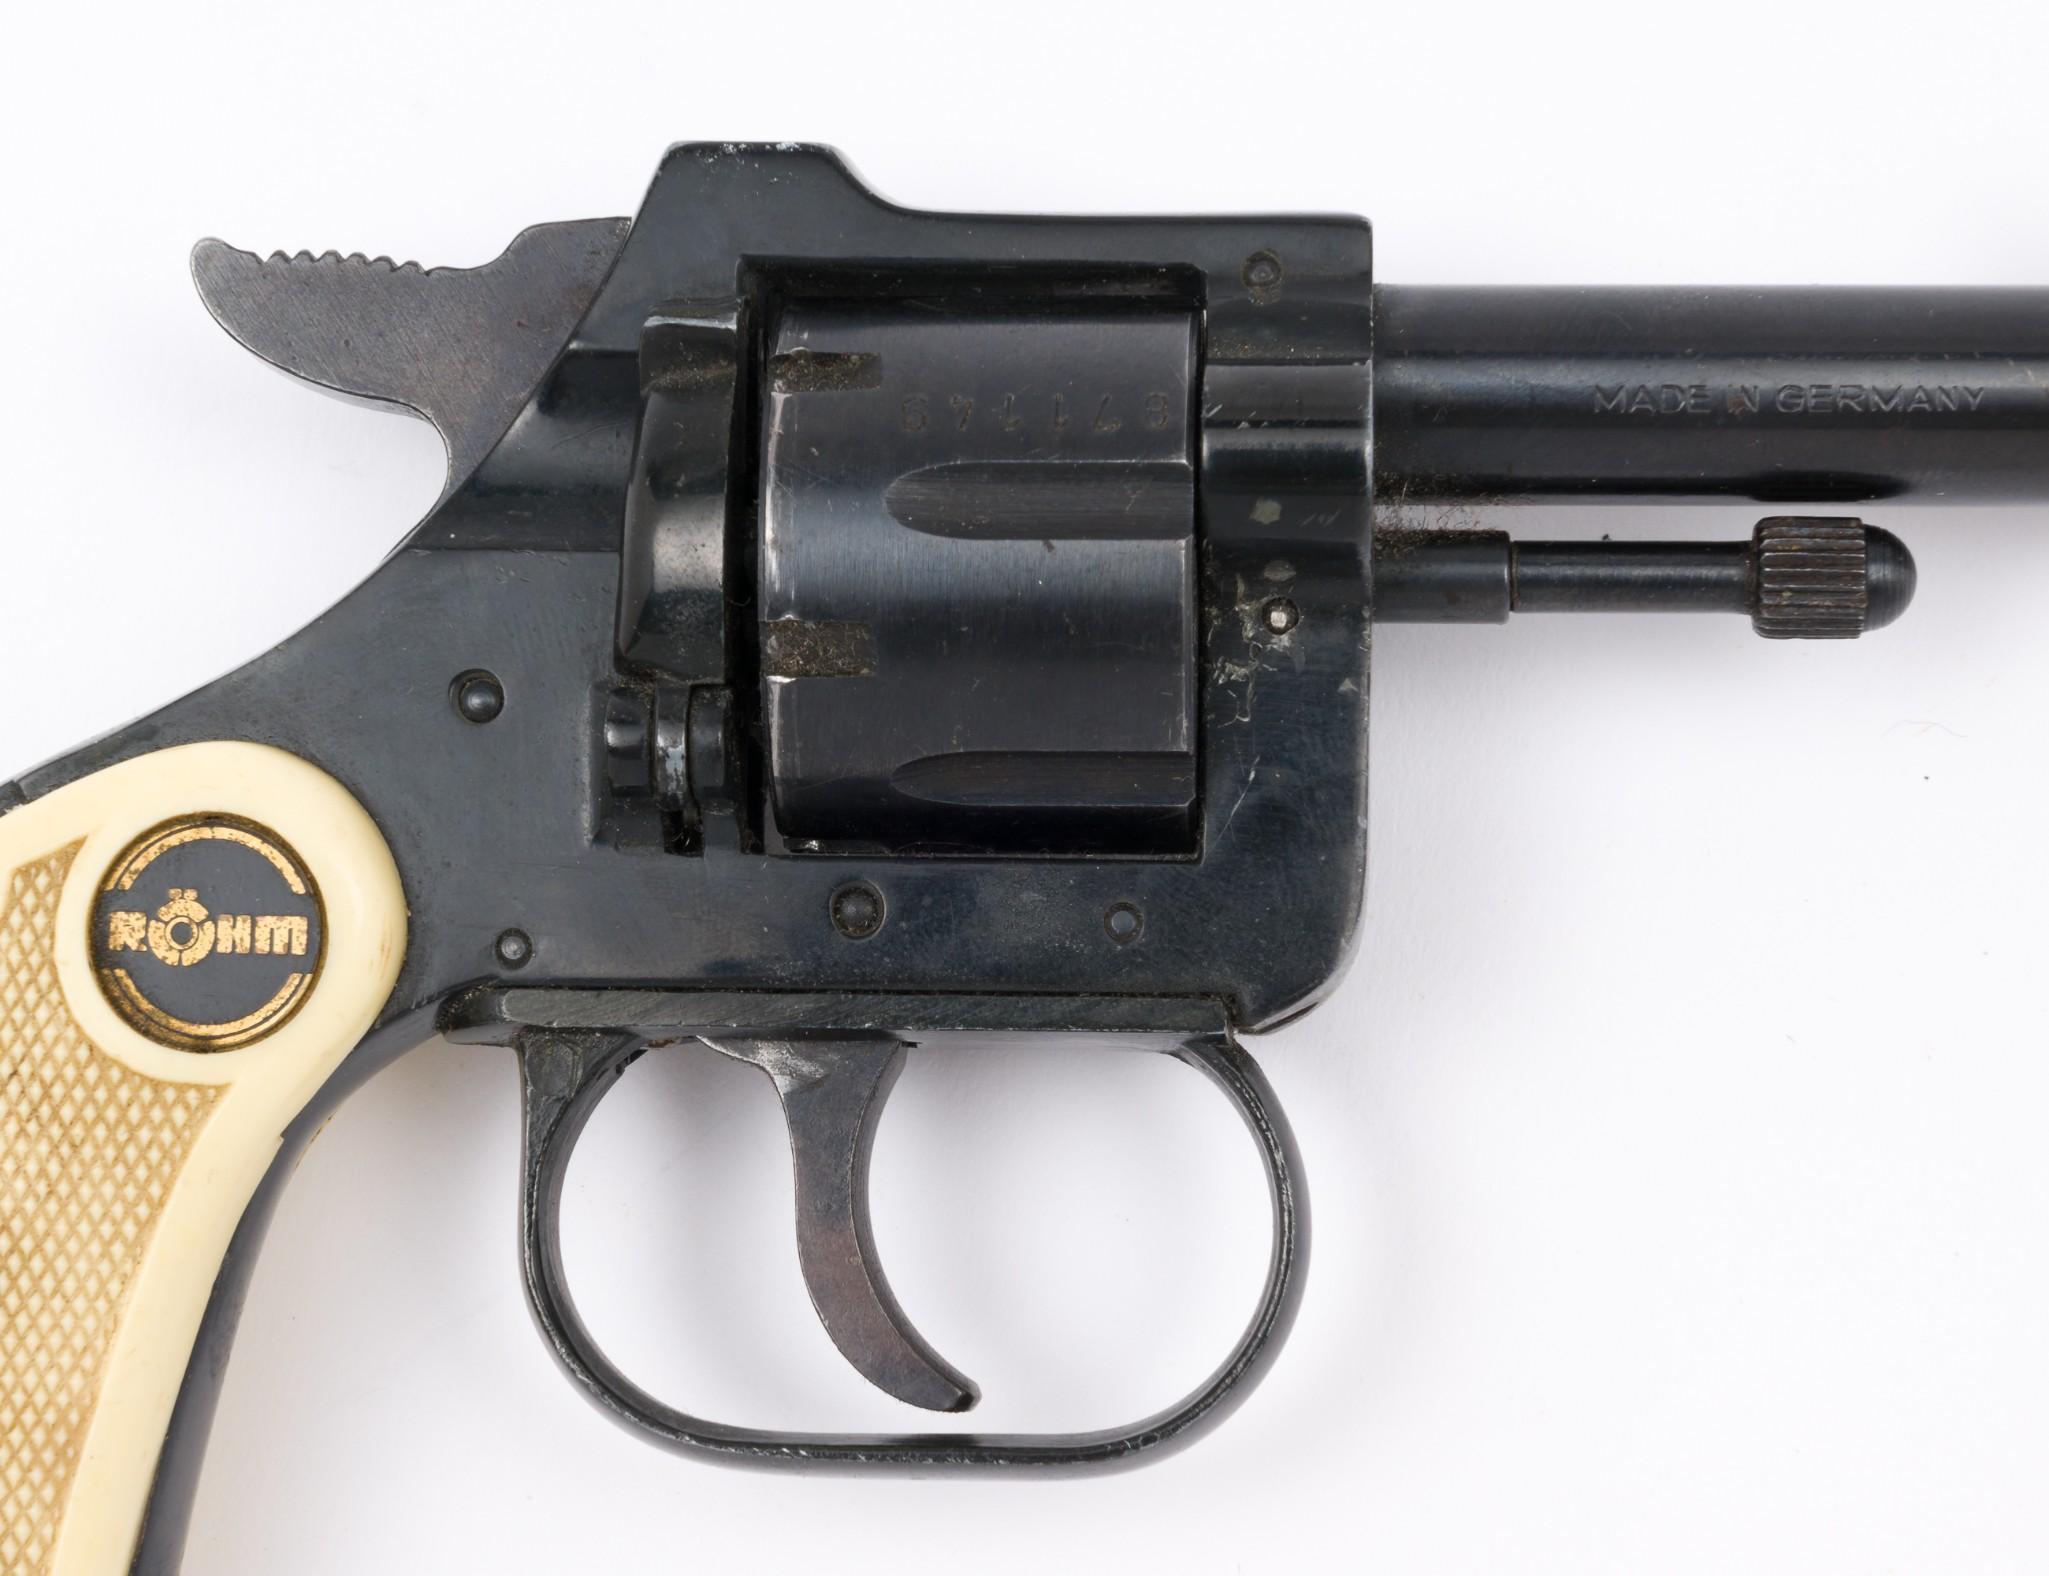 Rohm RG10 .22 Double Action Revolver